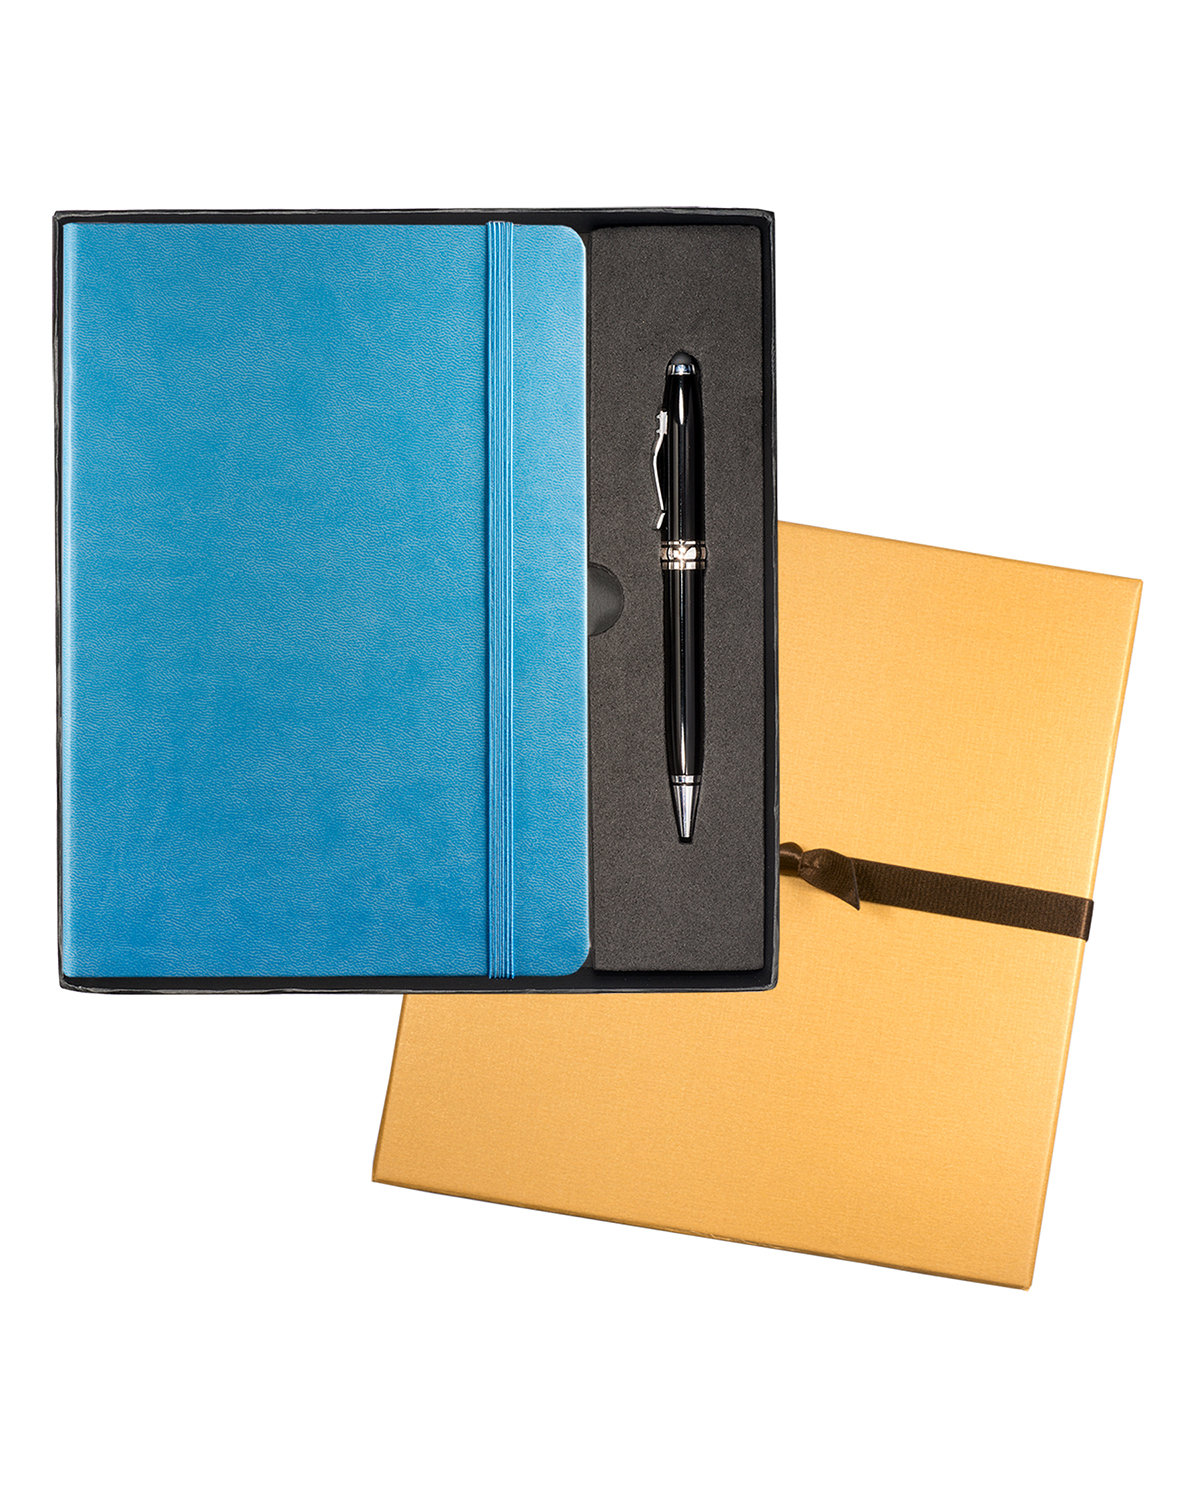 Leeman Tuscany™ Journal And Executive Stylus Pen Set light blue 